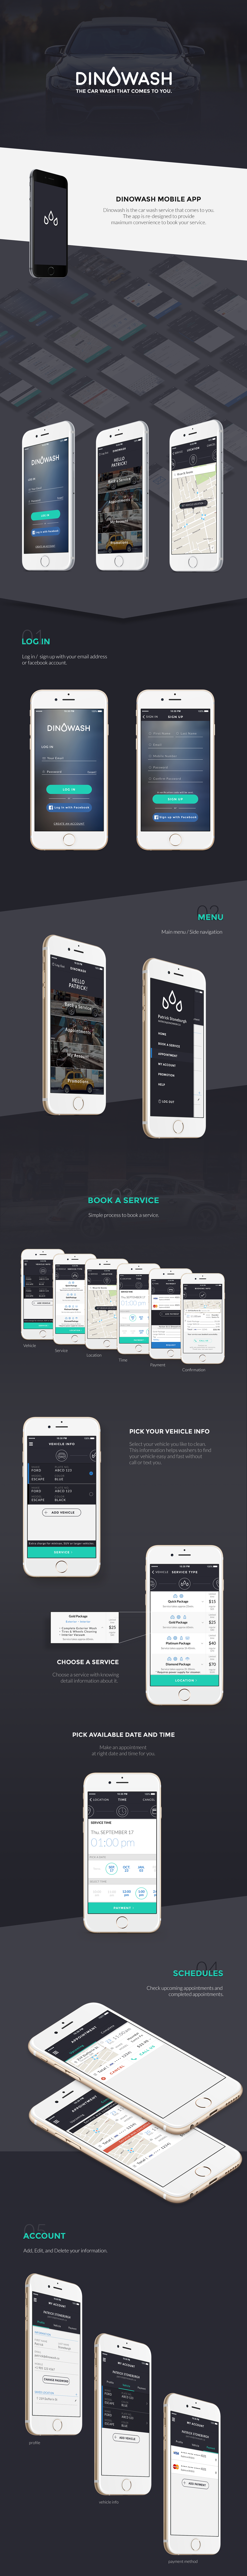 UI ux mobile app design on-demand car wash Interface Toronto